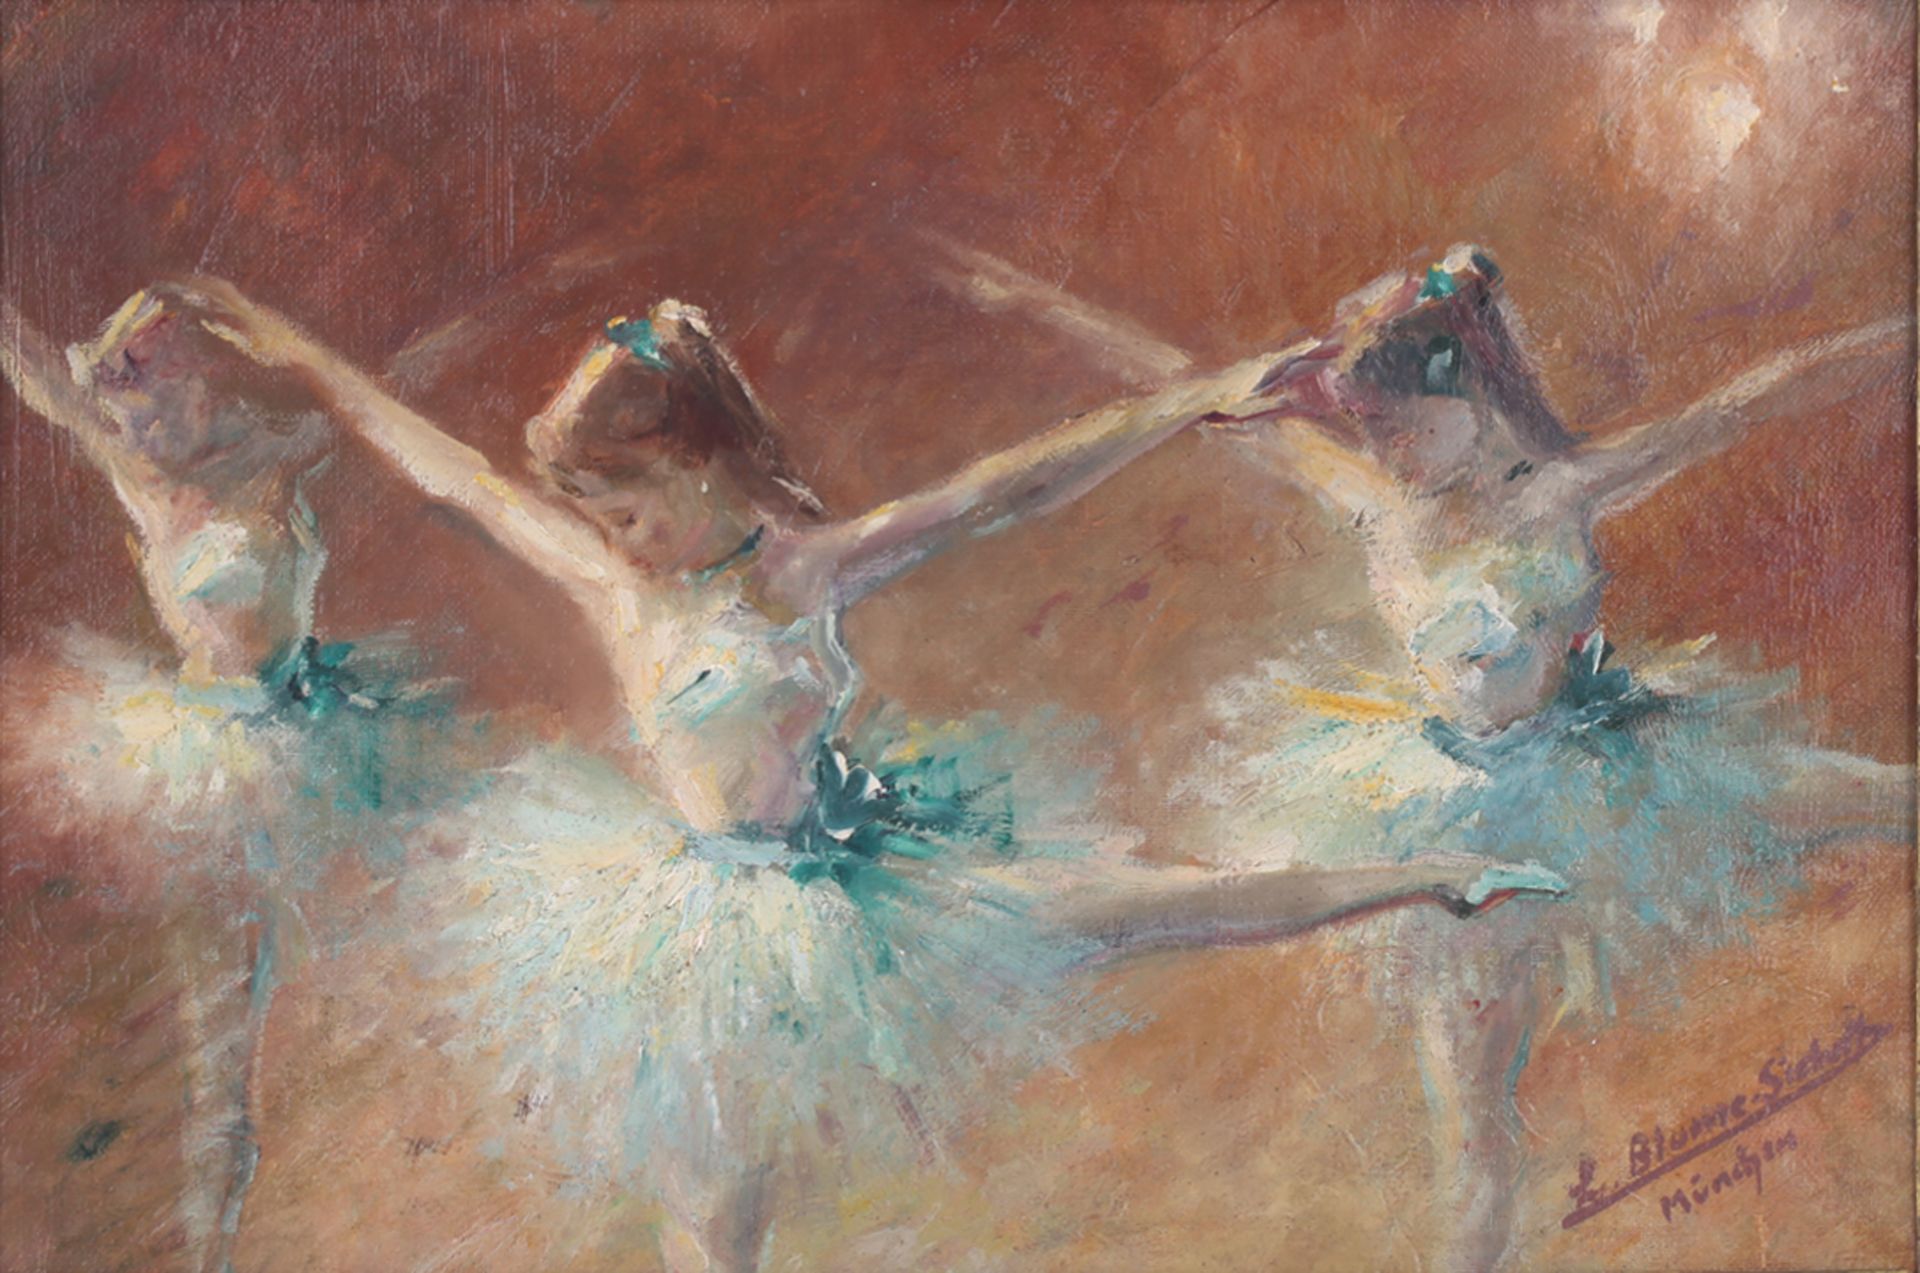 Blume-Siebert, Ludwig. Ballerinas. [Late of the XIX - beginning oh the XX century]. Oil on canvas. 2